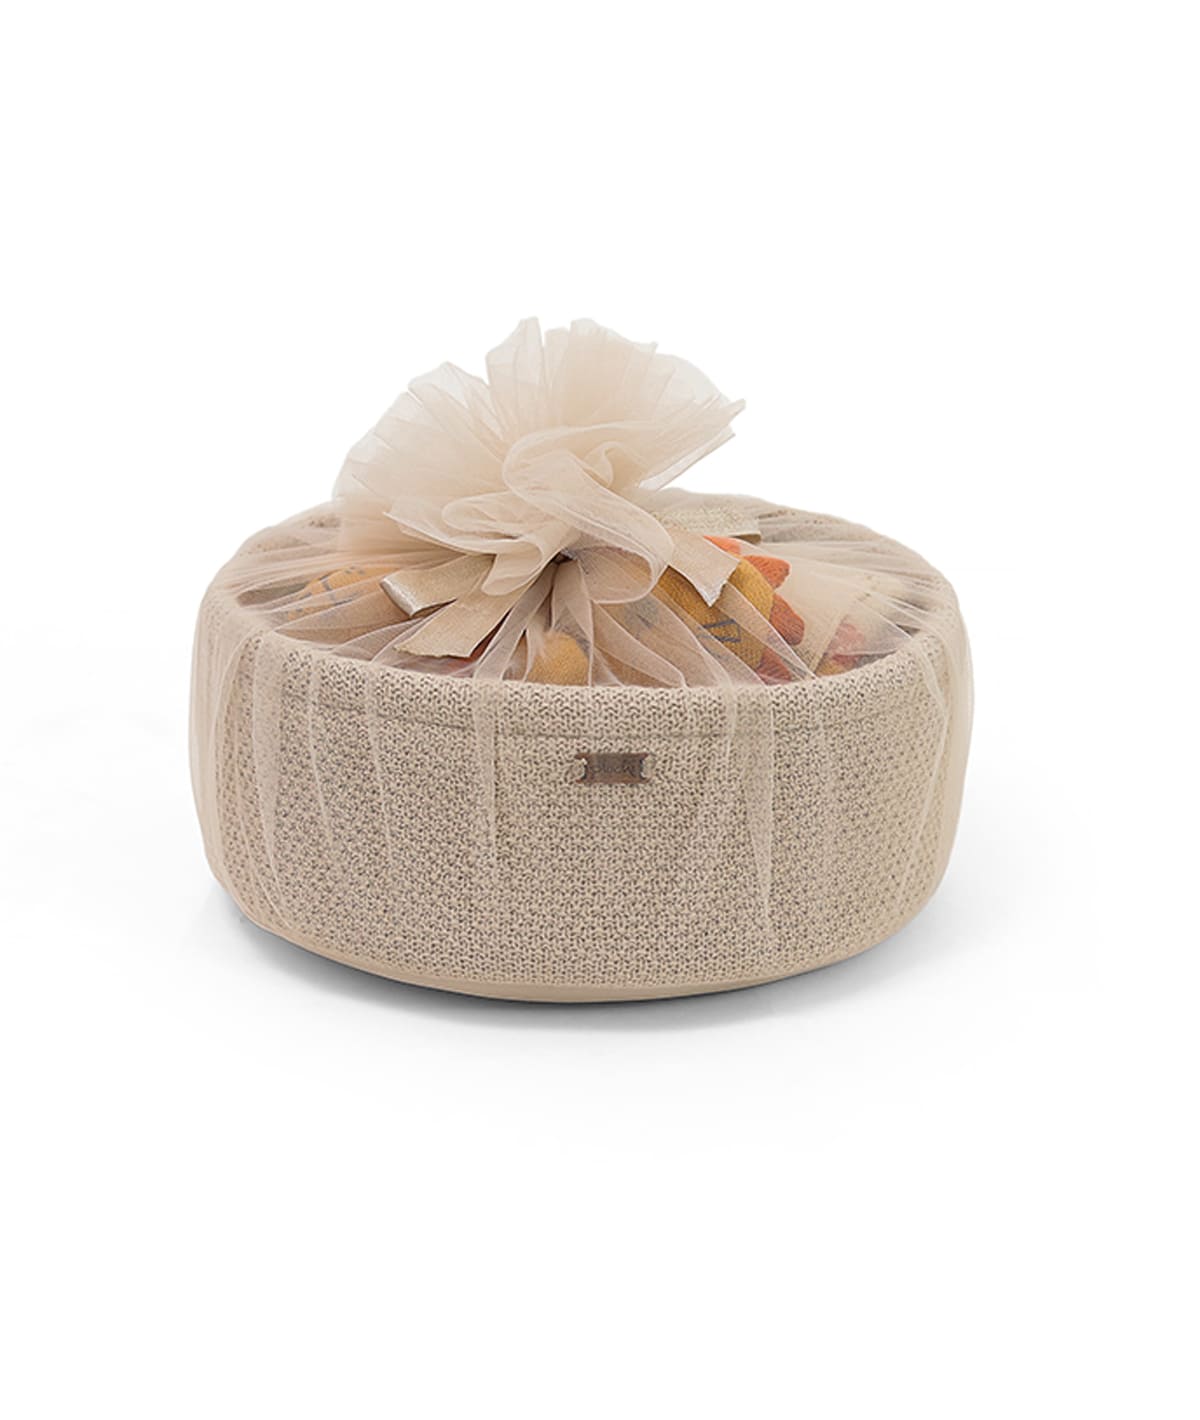 Leo Gift Basket (Set of 4 pcs - Storage Basket, Knitted Baby Blanket, Soft Toy, and Rattle)